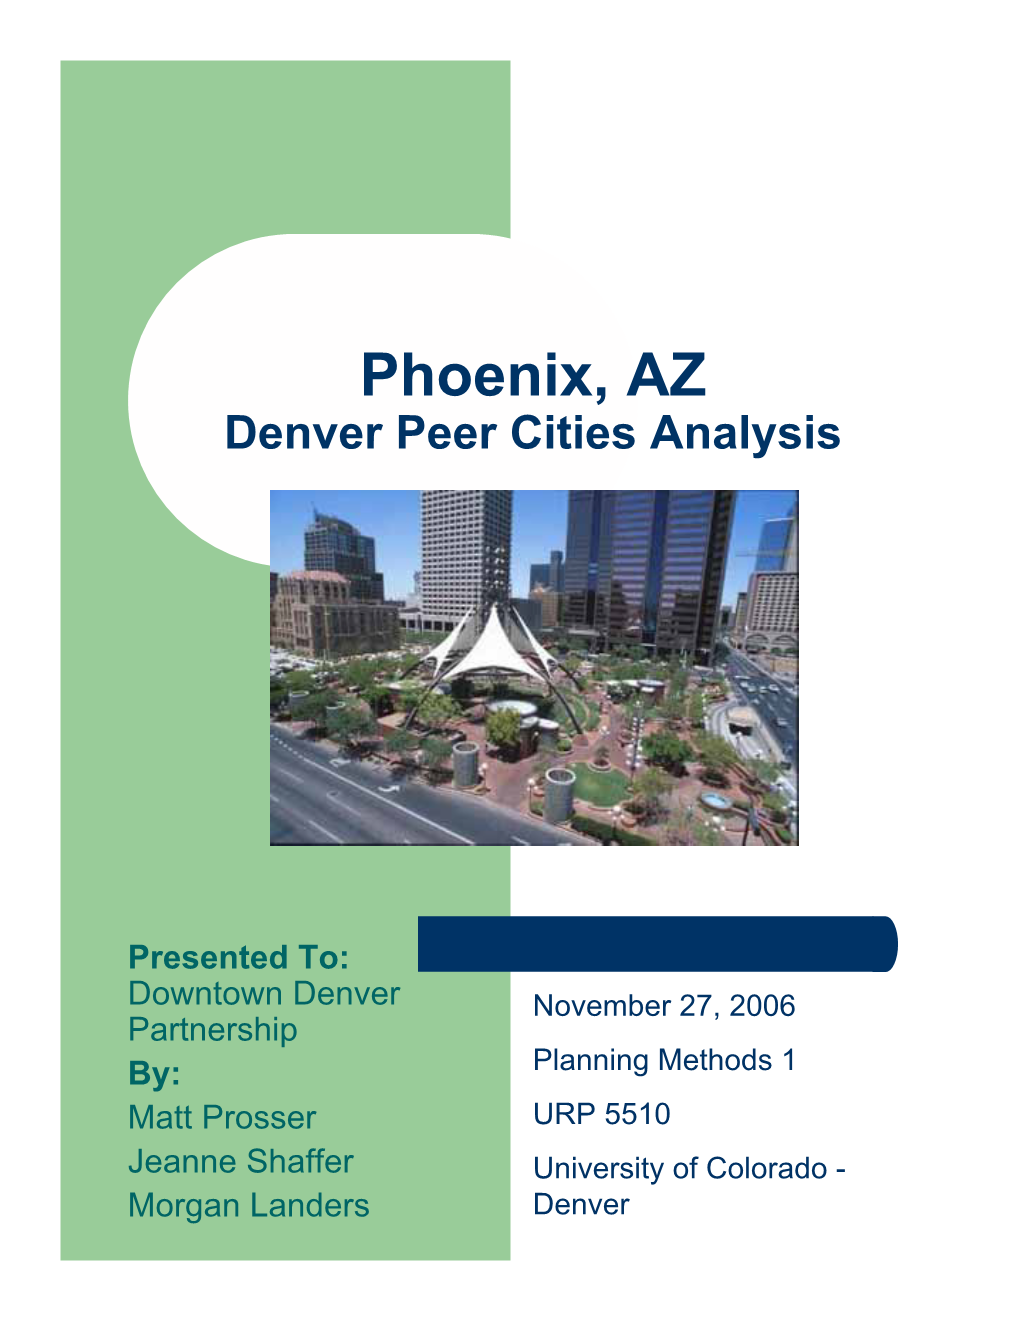 Phoenix, AZ Denver Peer Cities Analysis